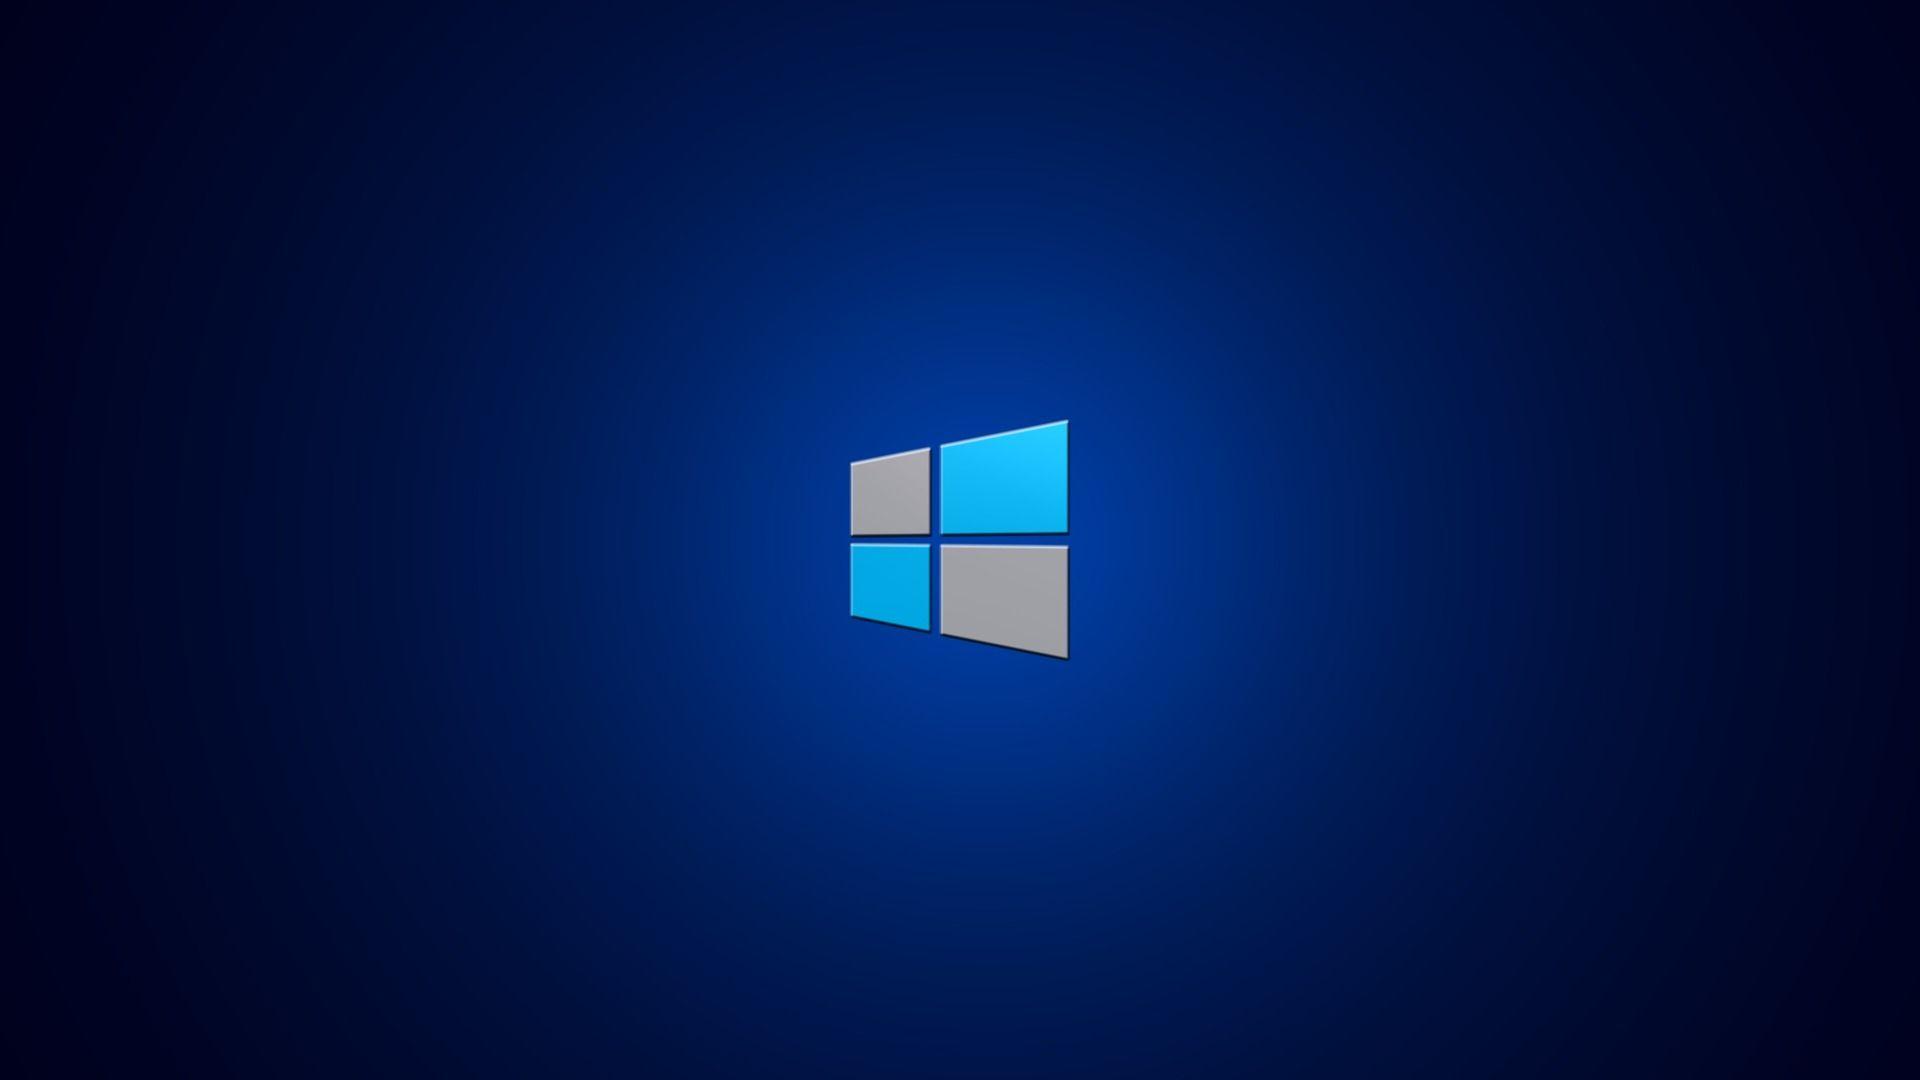 1080P Logo - Windows 8 Minimal Official Logo 1080p HD Wallpaper 1080p HD | stuff ...